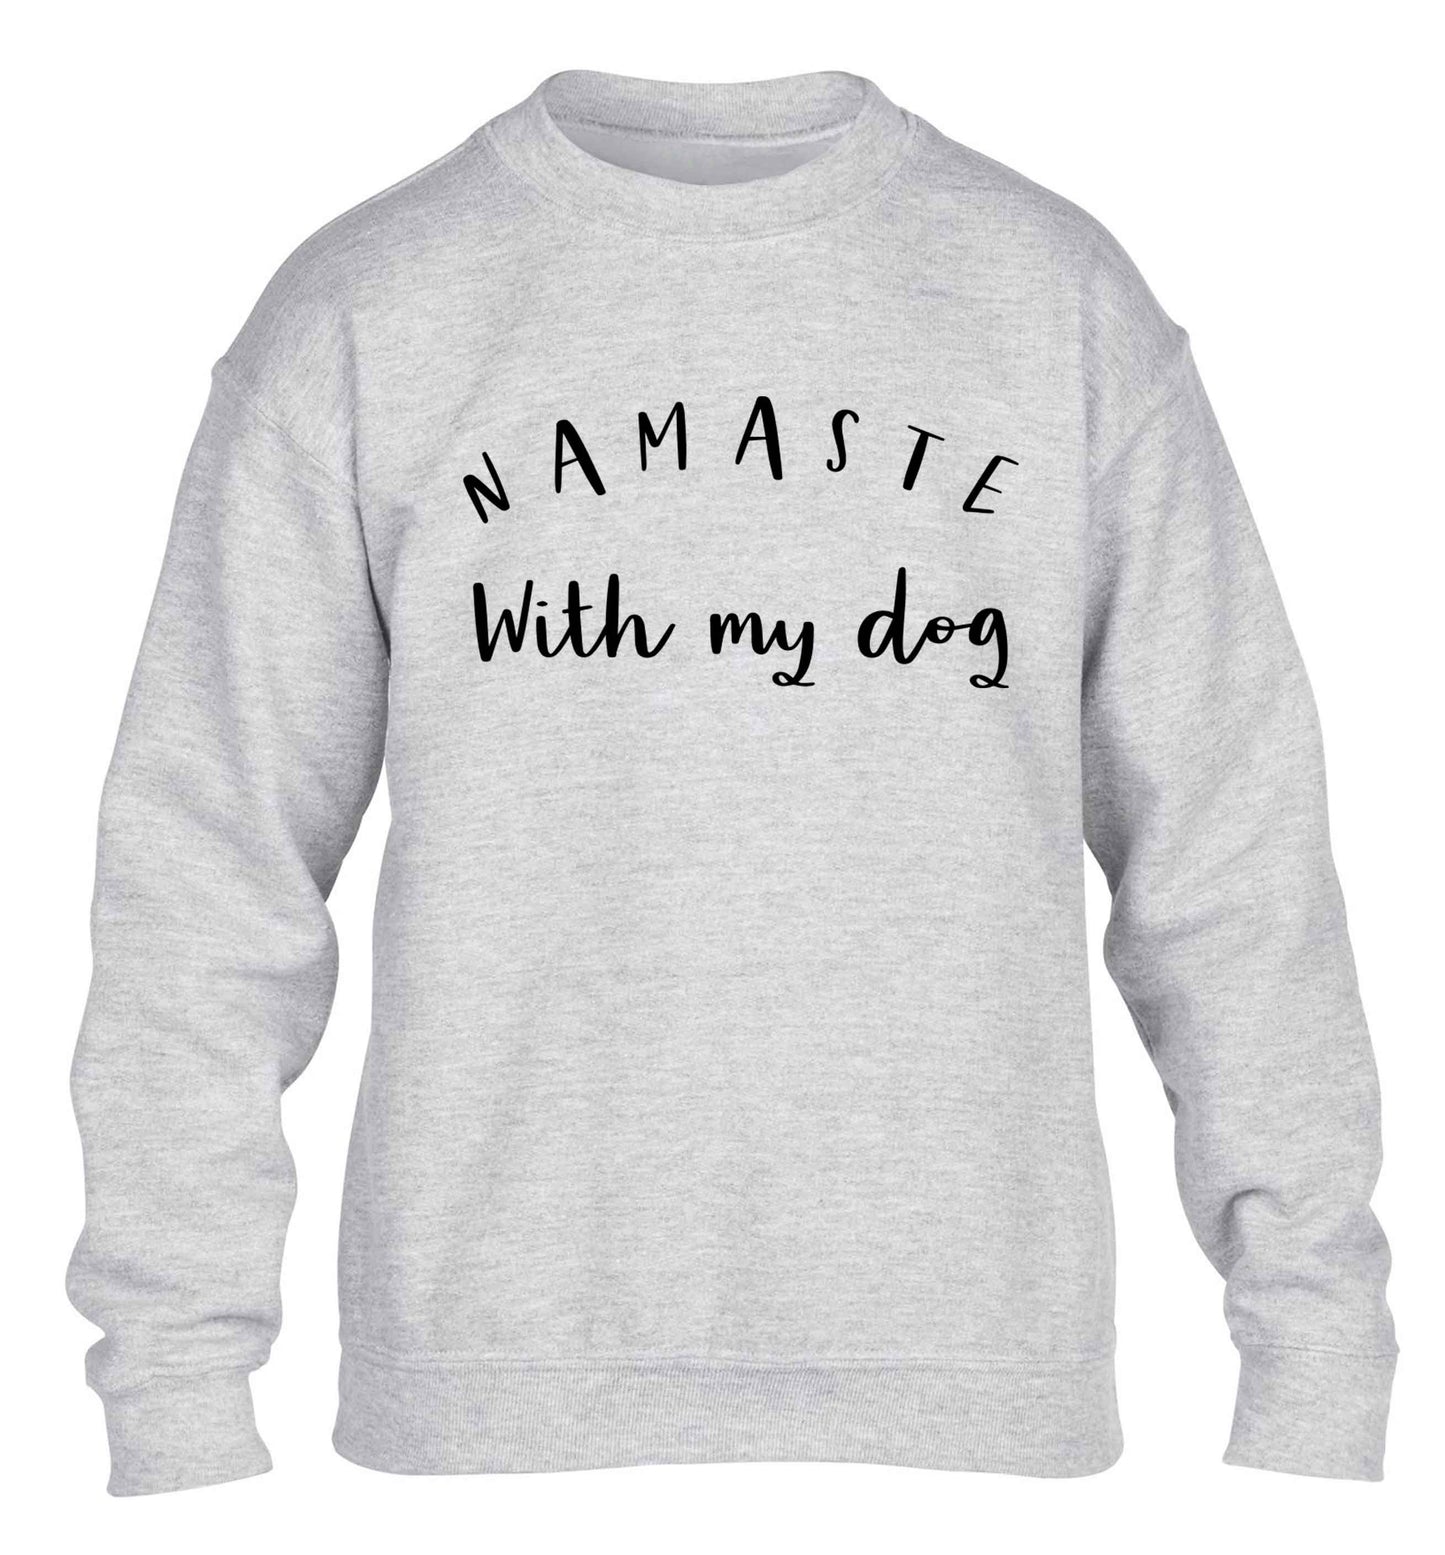 Namaste with my dog children's grey sweater 12-13 Years